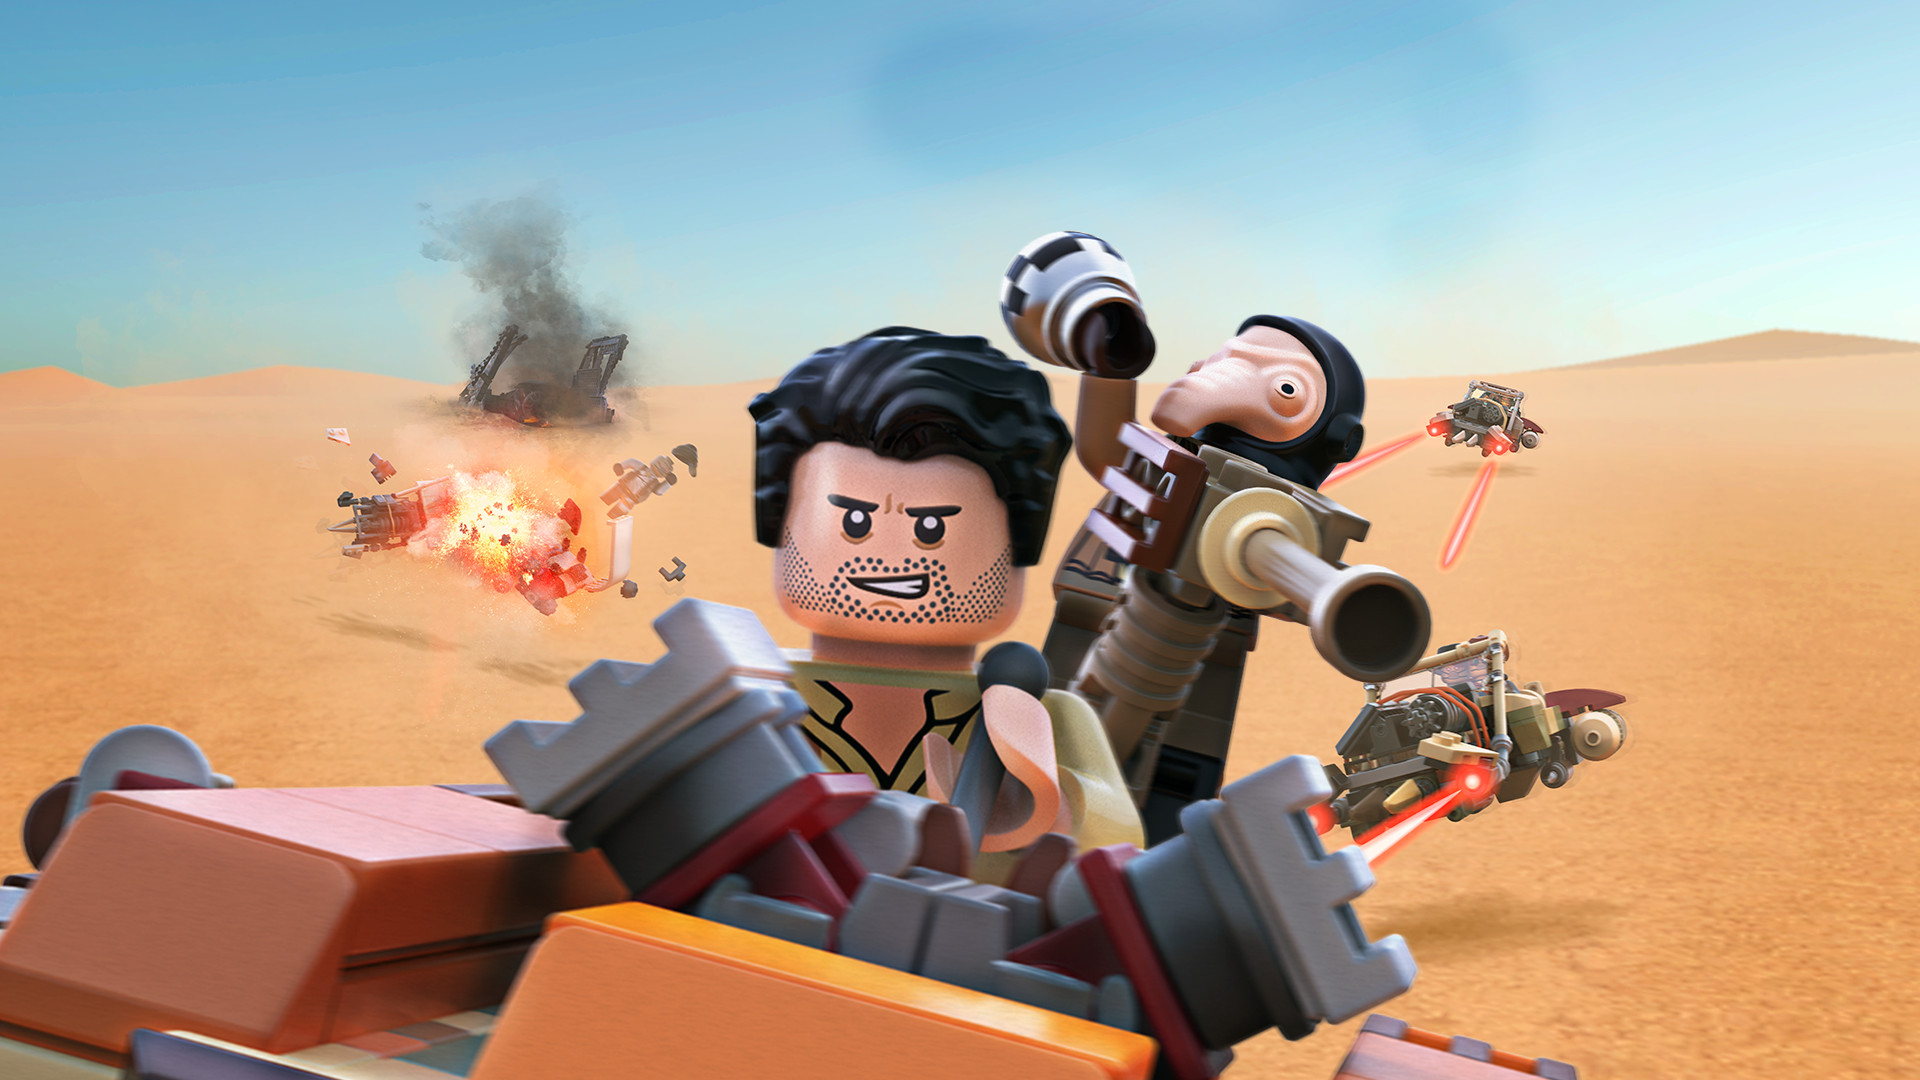 LEGO Star Wars: The Force Awakens - Jakku: Poe's Quest for Survival DLC Steam CD Key, $2.25